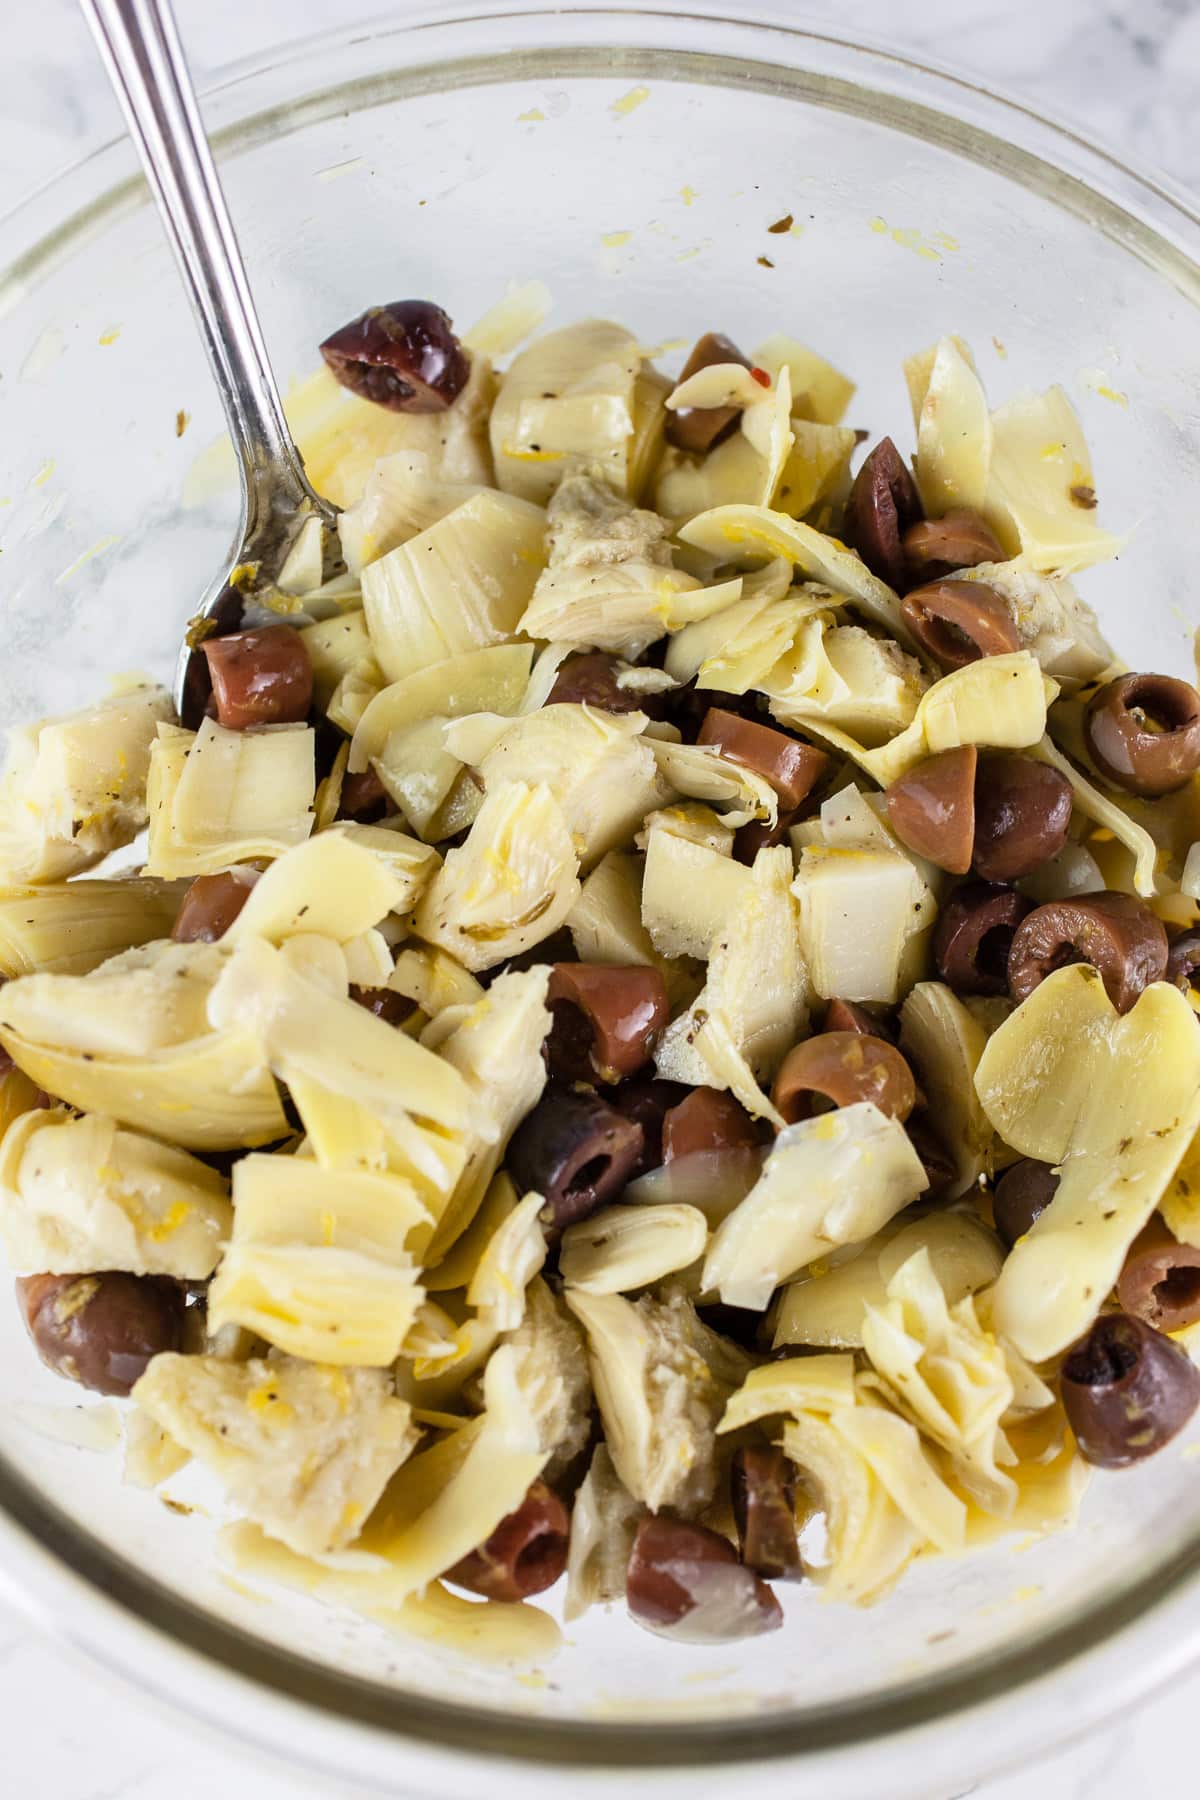 Marinated artichoke hearts and chopped Kalamata olives mixed together in glass bowl.